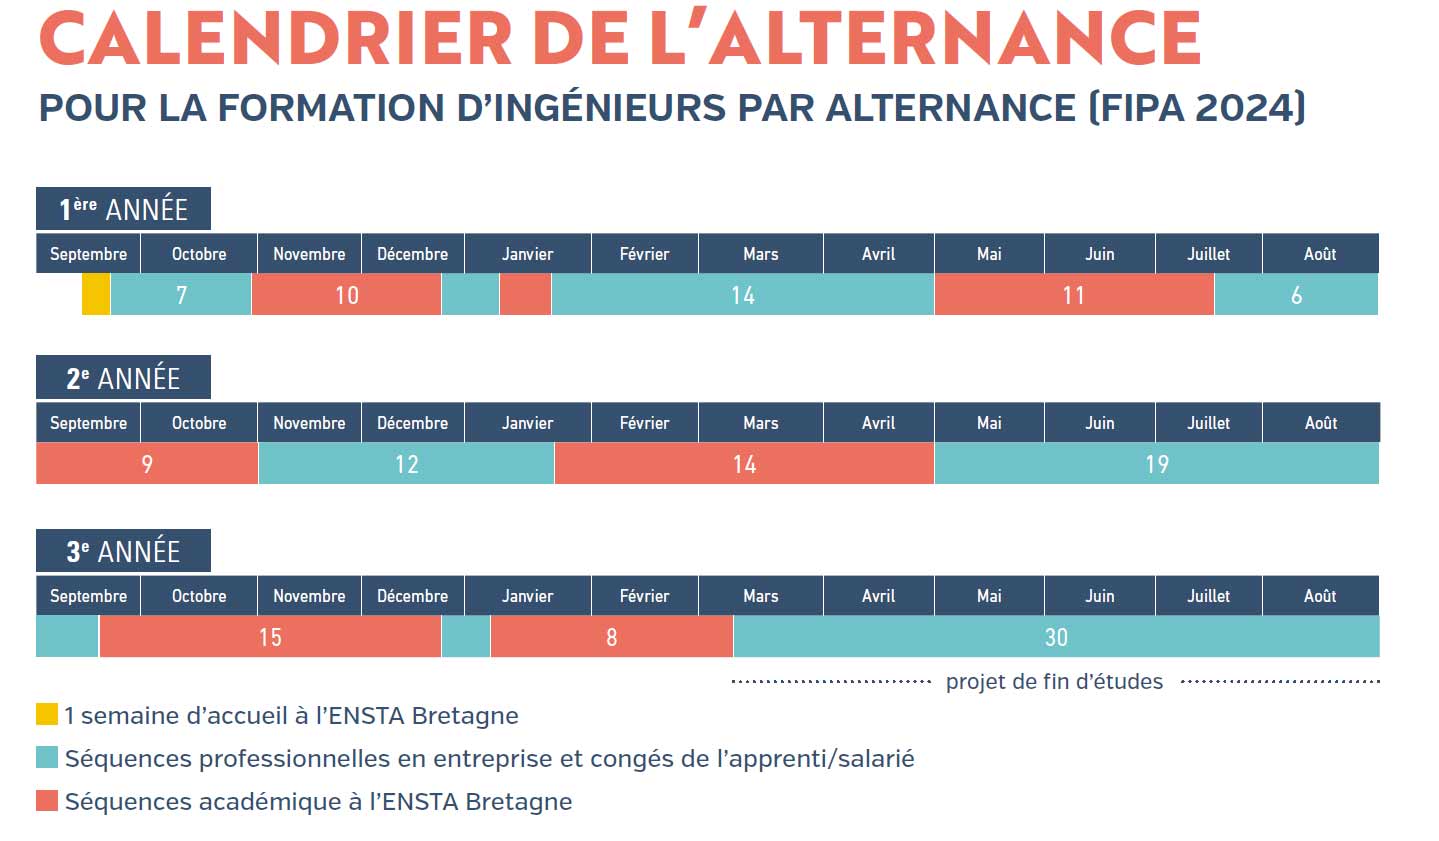 ENSTA Bretagne : Co-operative (apprentice) learning program and calendar